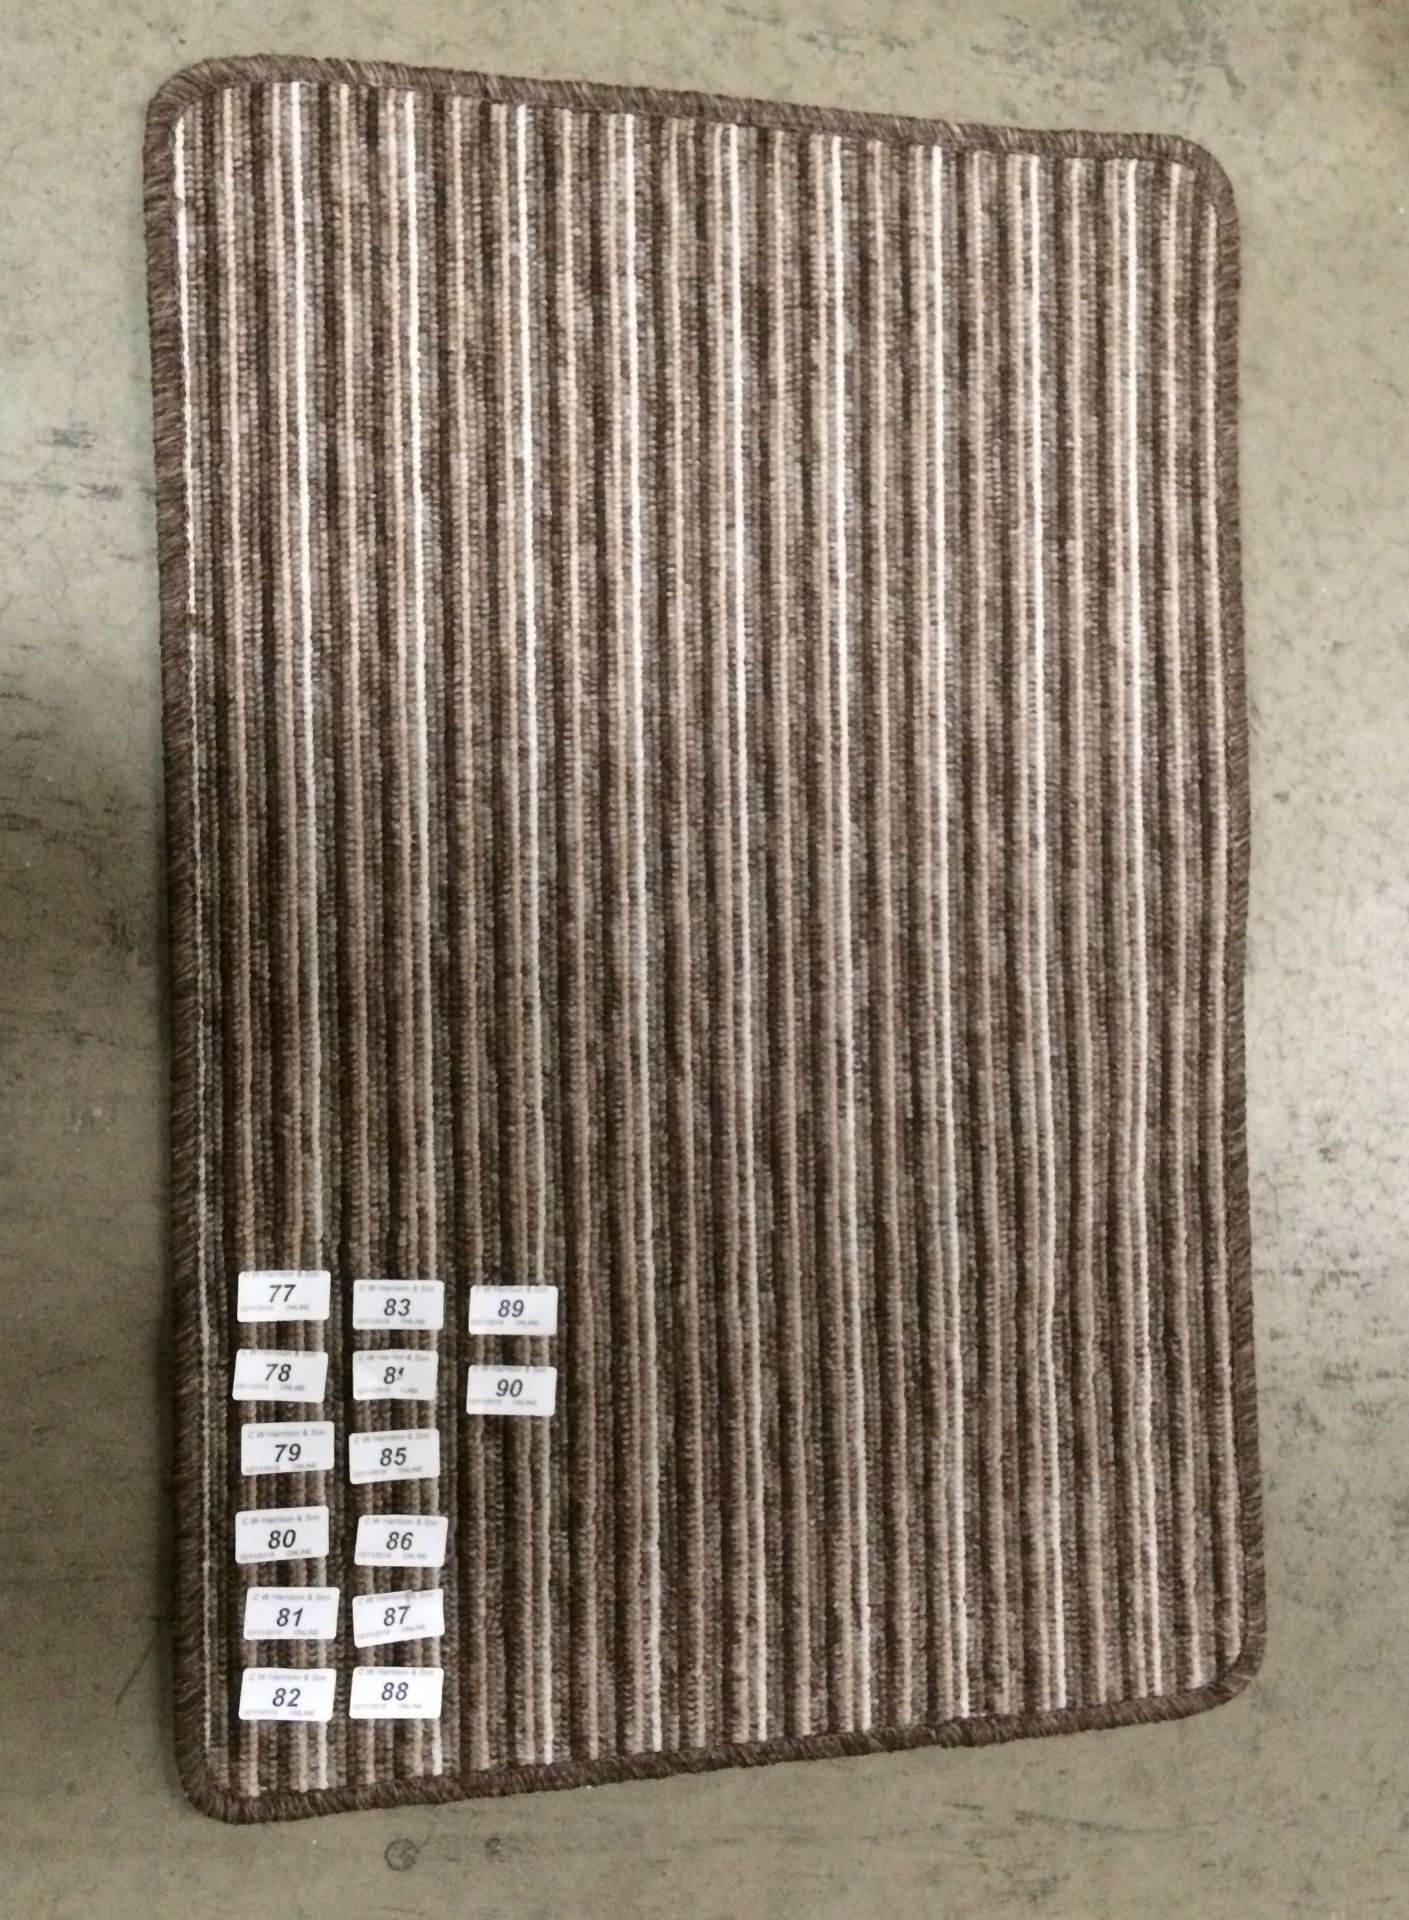 10 x brown striped door mats each 50 x 75cm